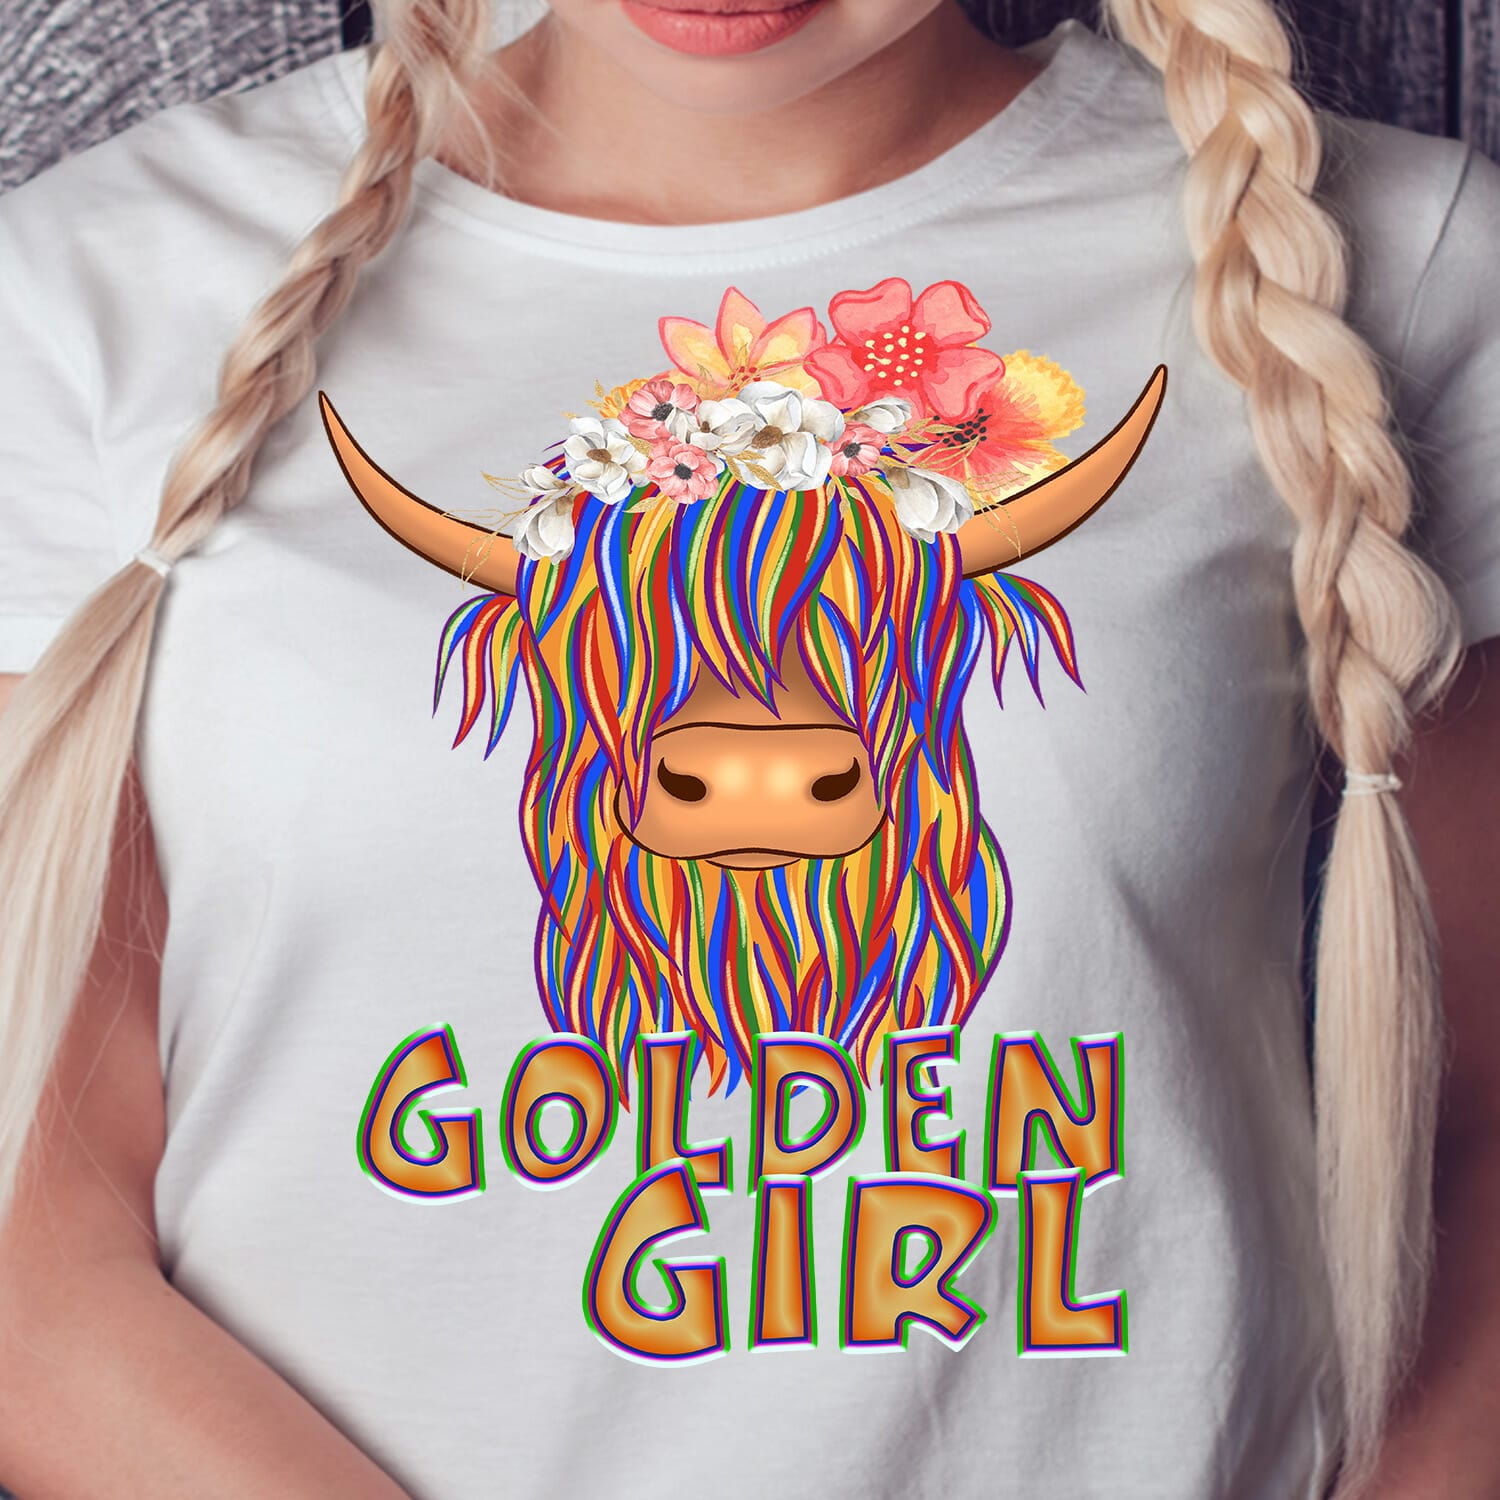 Golden girl cow tshirt design